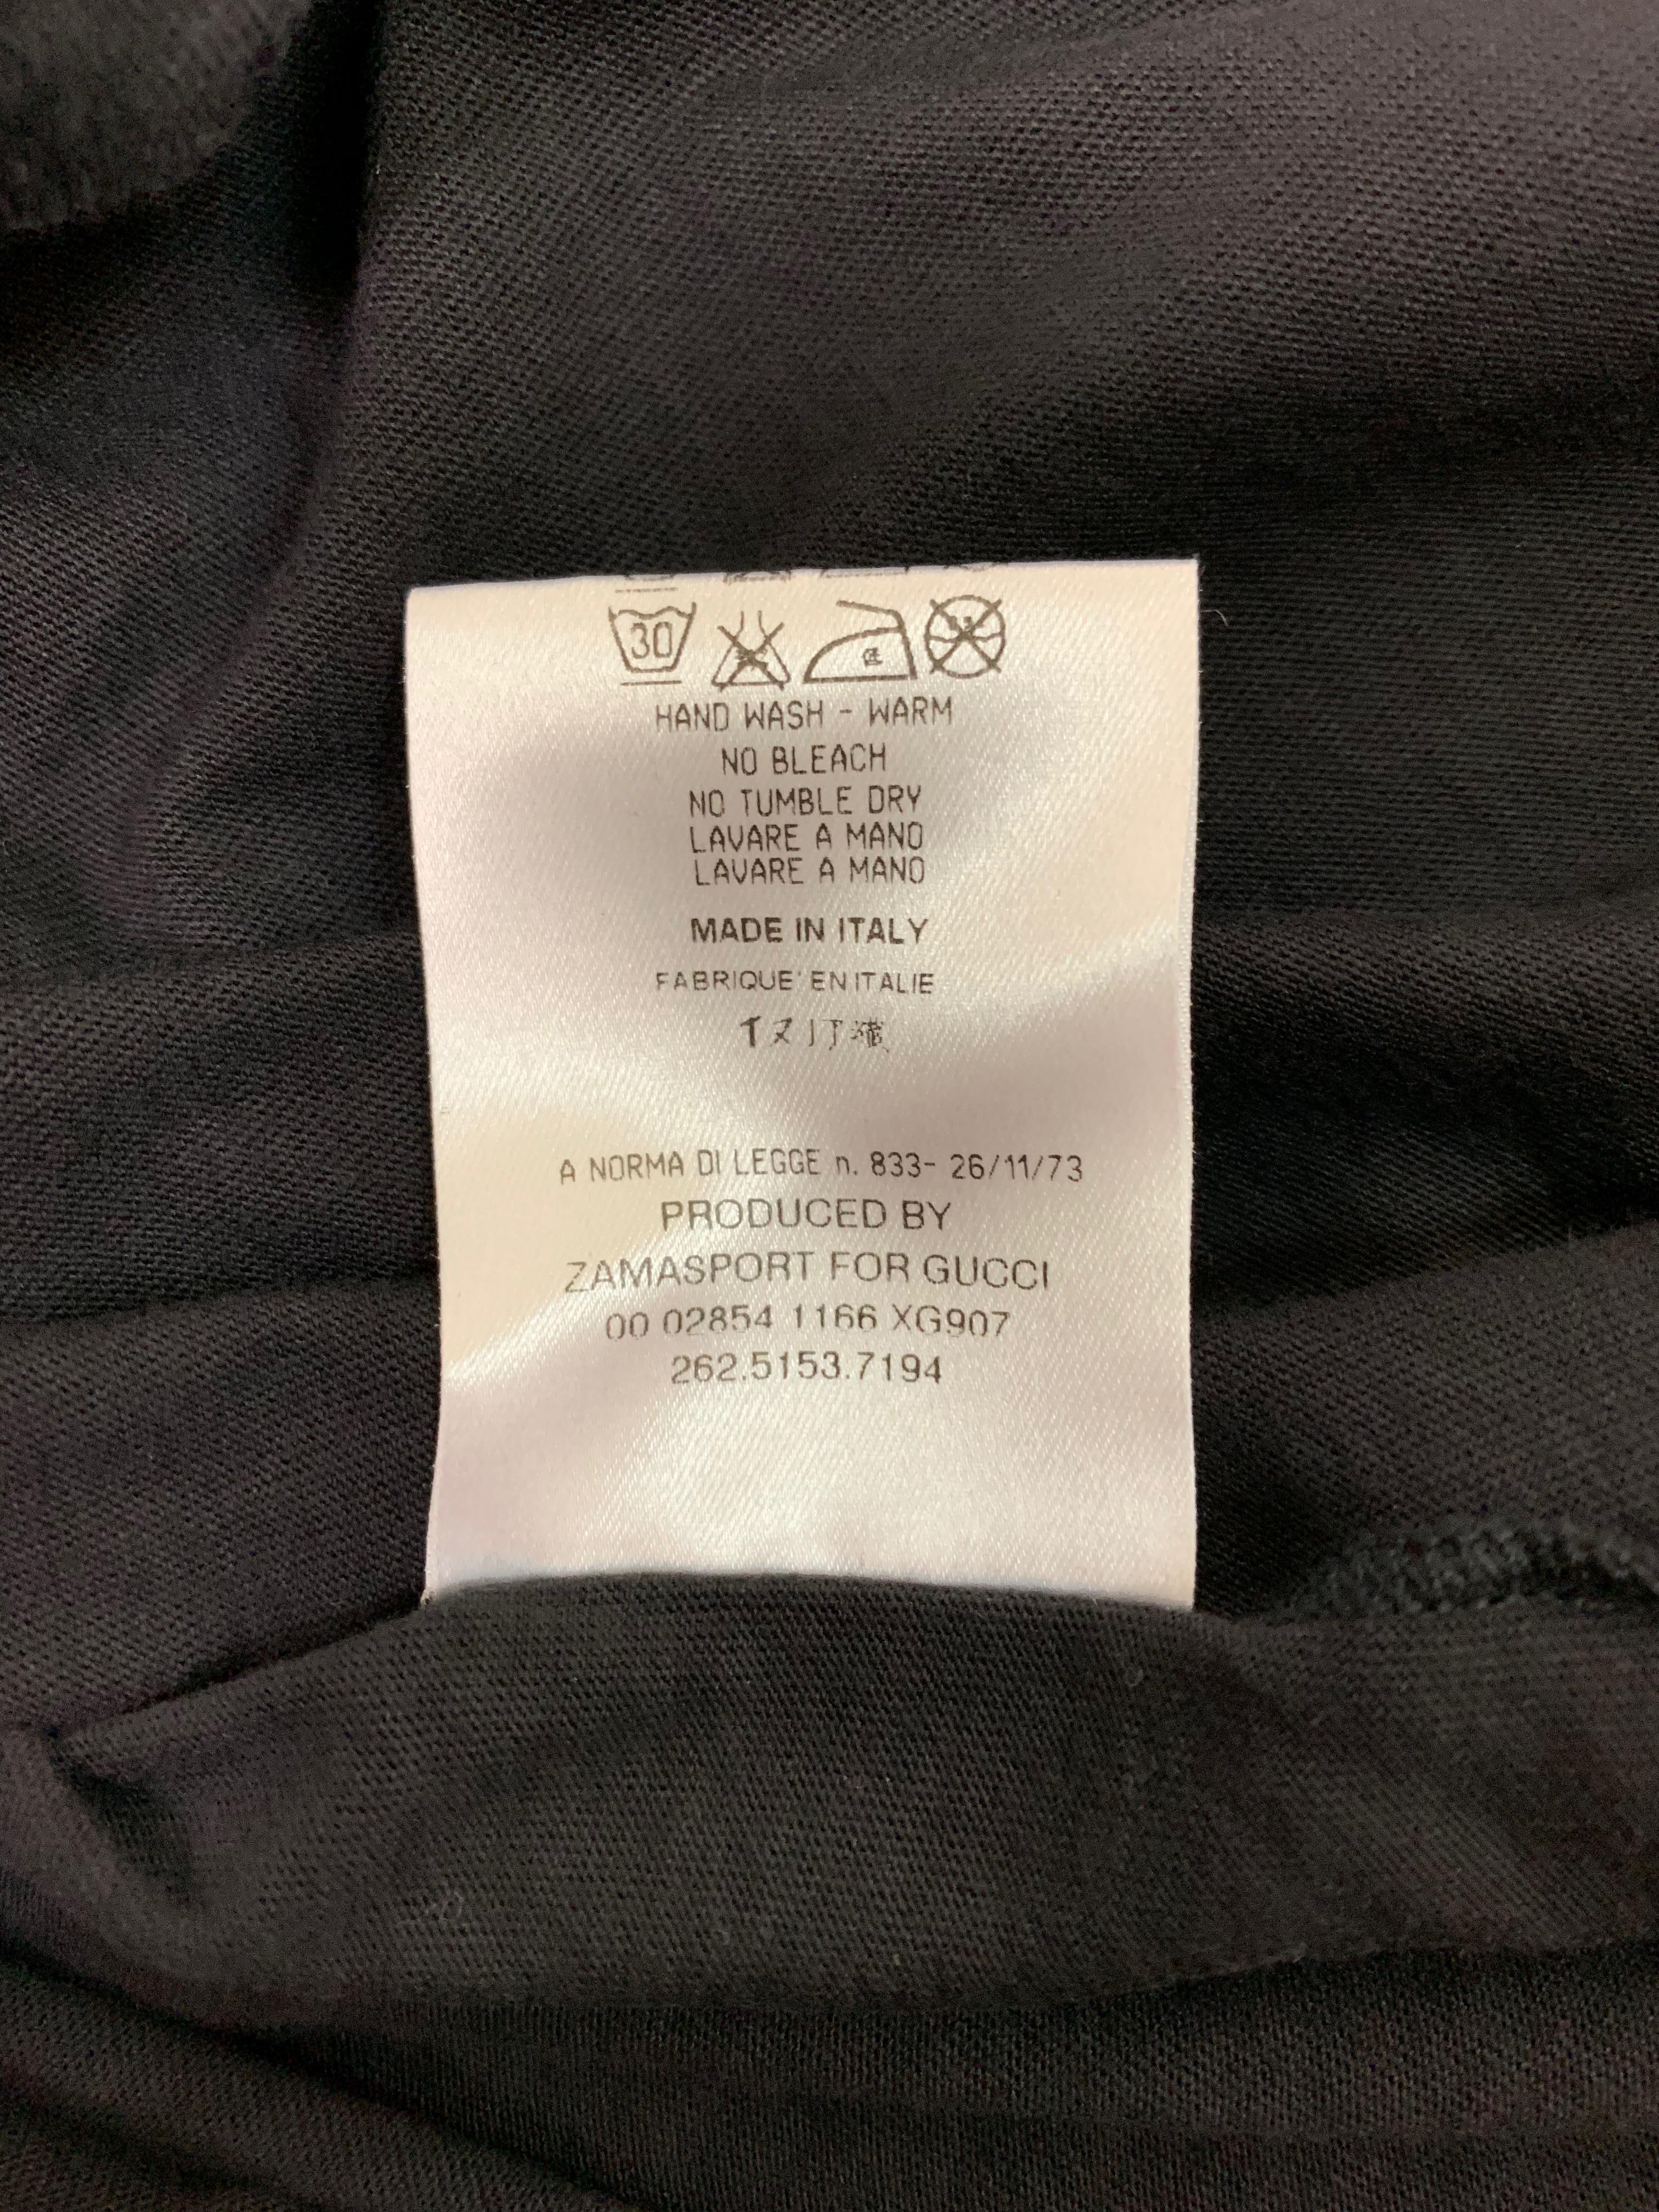 S/S 2000 Gucci by Tom Ford Black V-Neck T-Shirt M 1